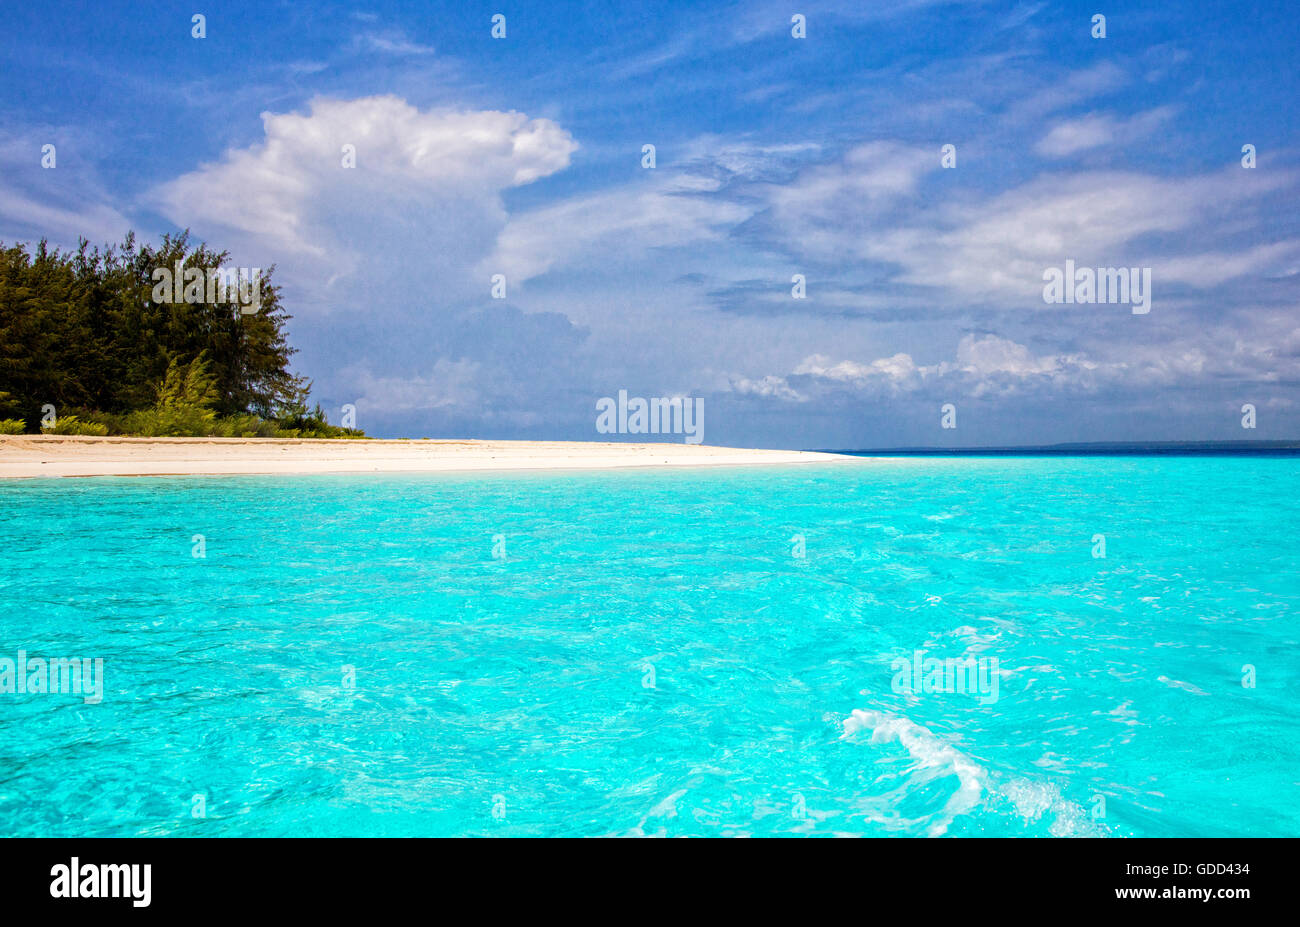 Turquoise seas off the white powder sand beach at Mnembe Island off the coast of Zanzibar East Africa Stock Photo